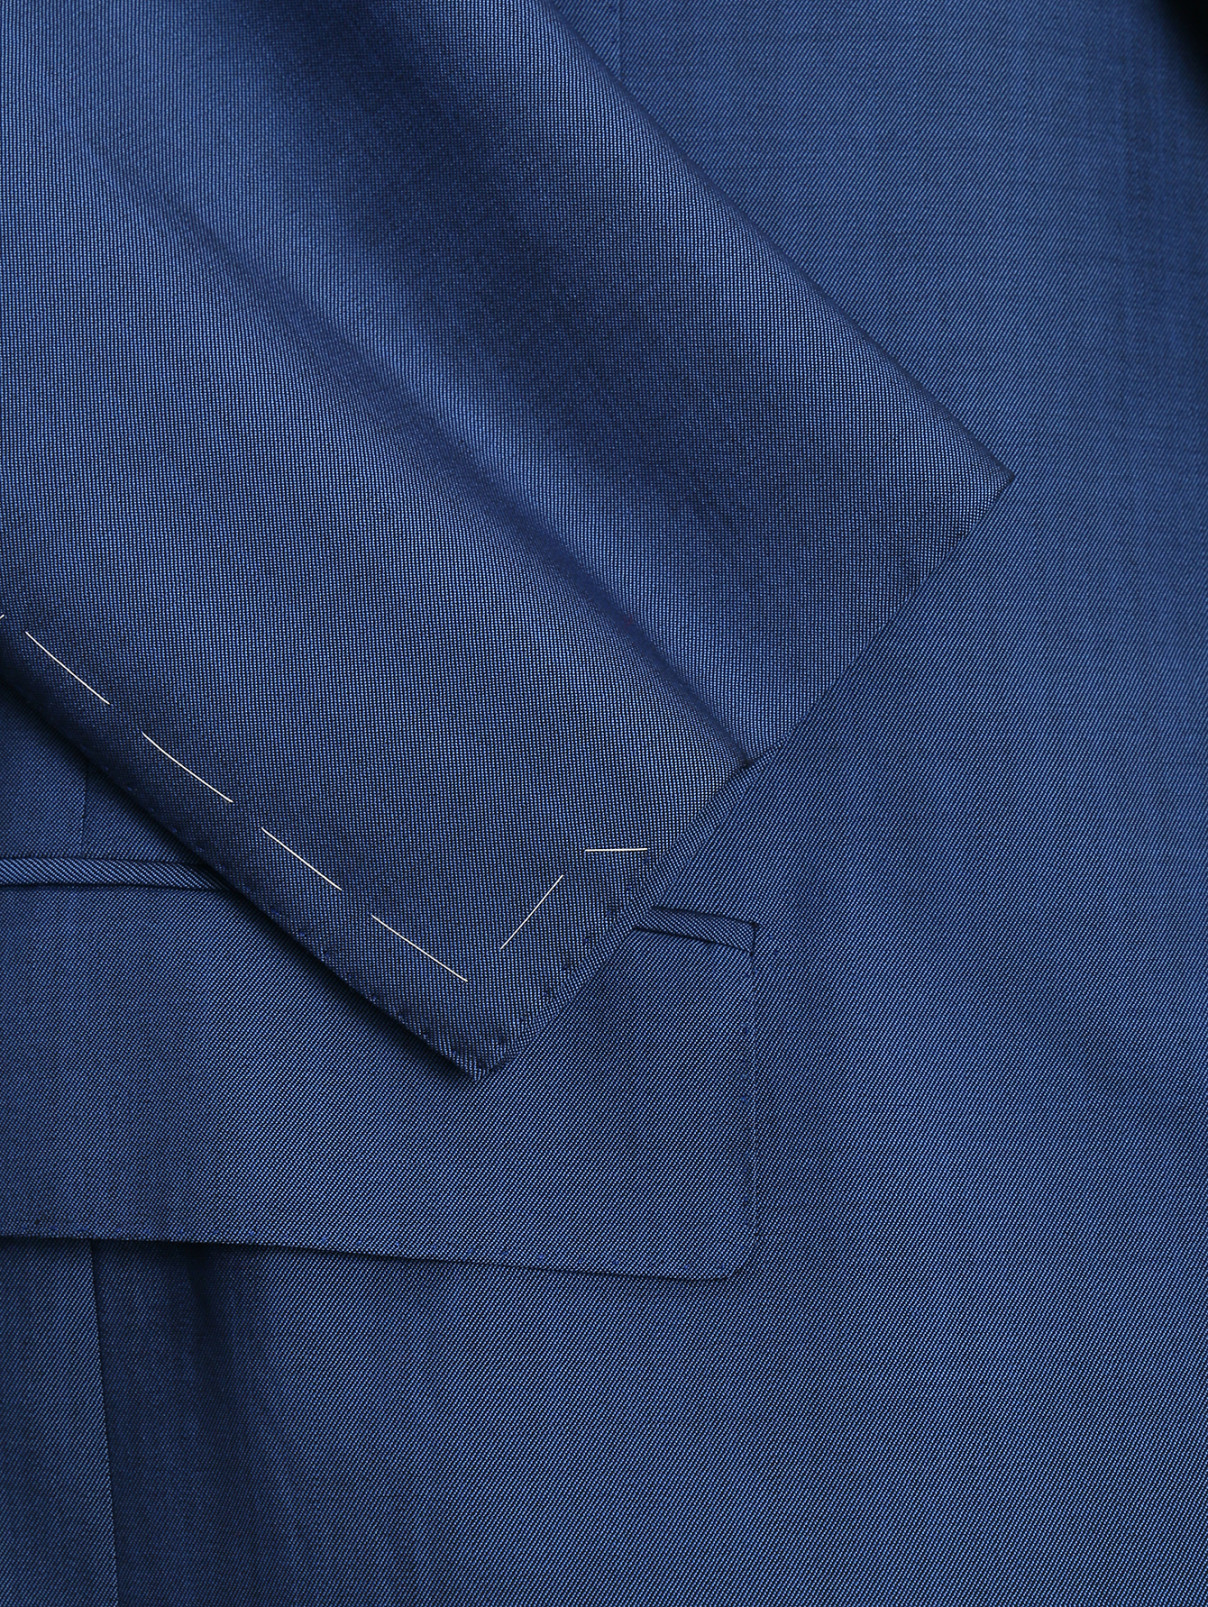 Костюм из шерсти и мохера Luciano Barbera  –  Общий вид  – Цвет:  Синий